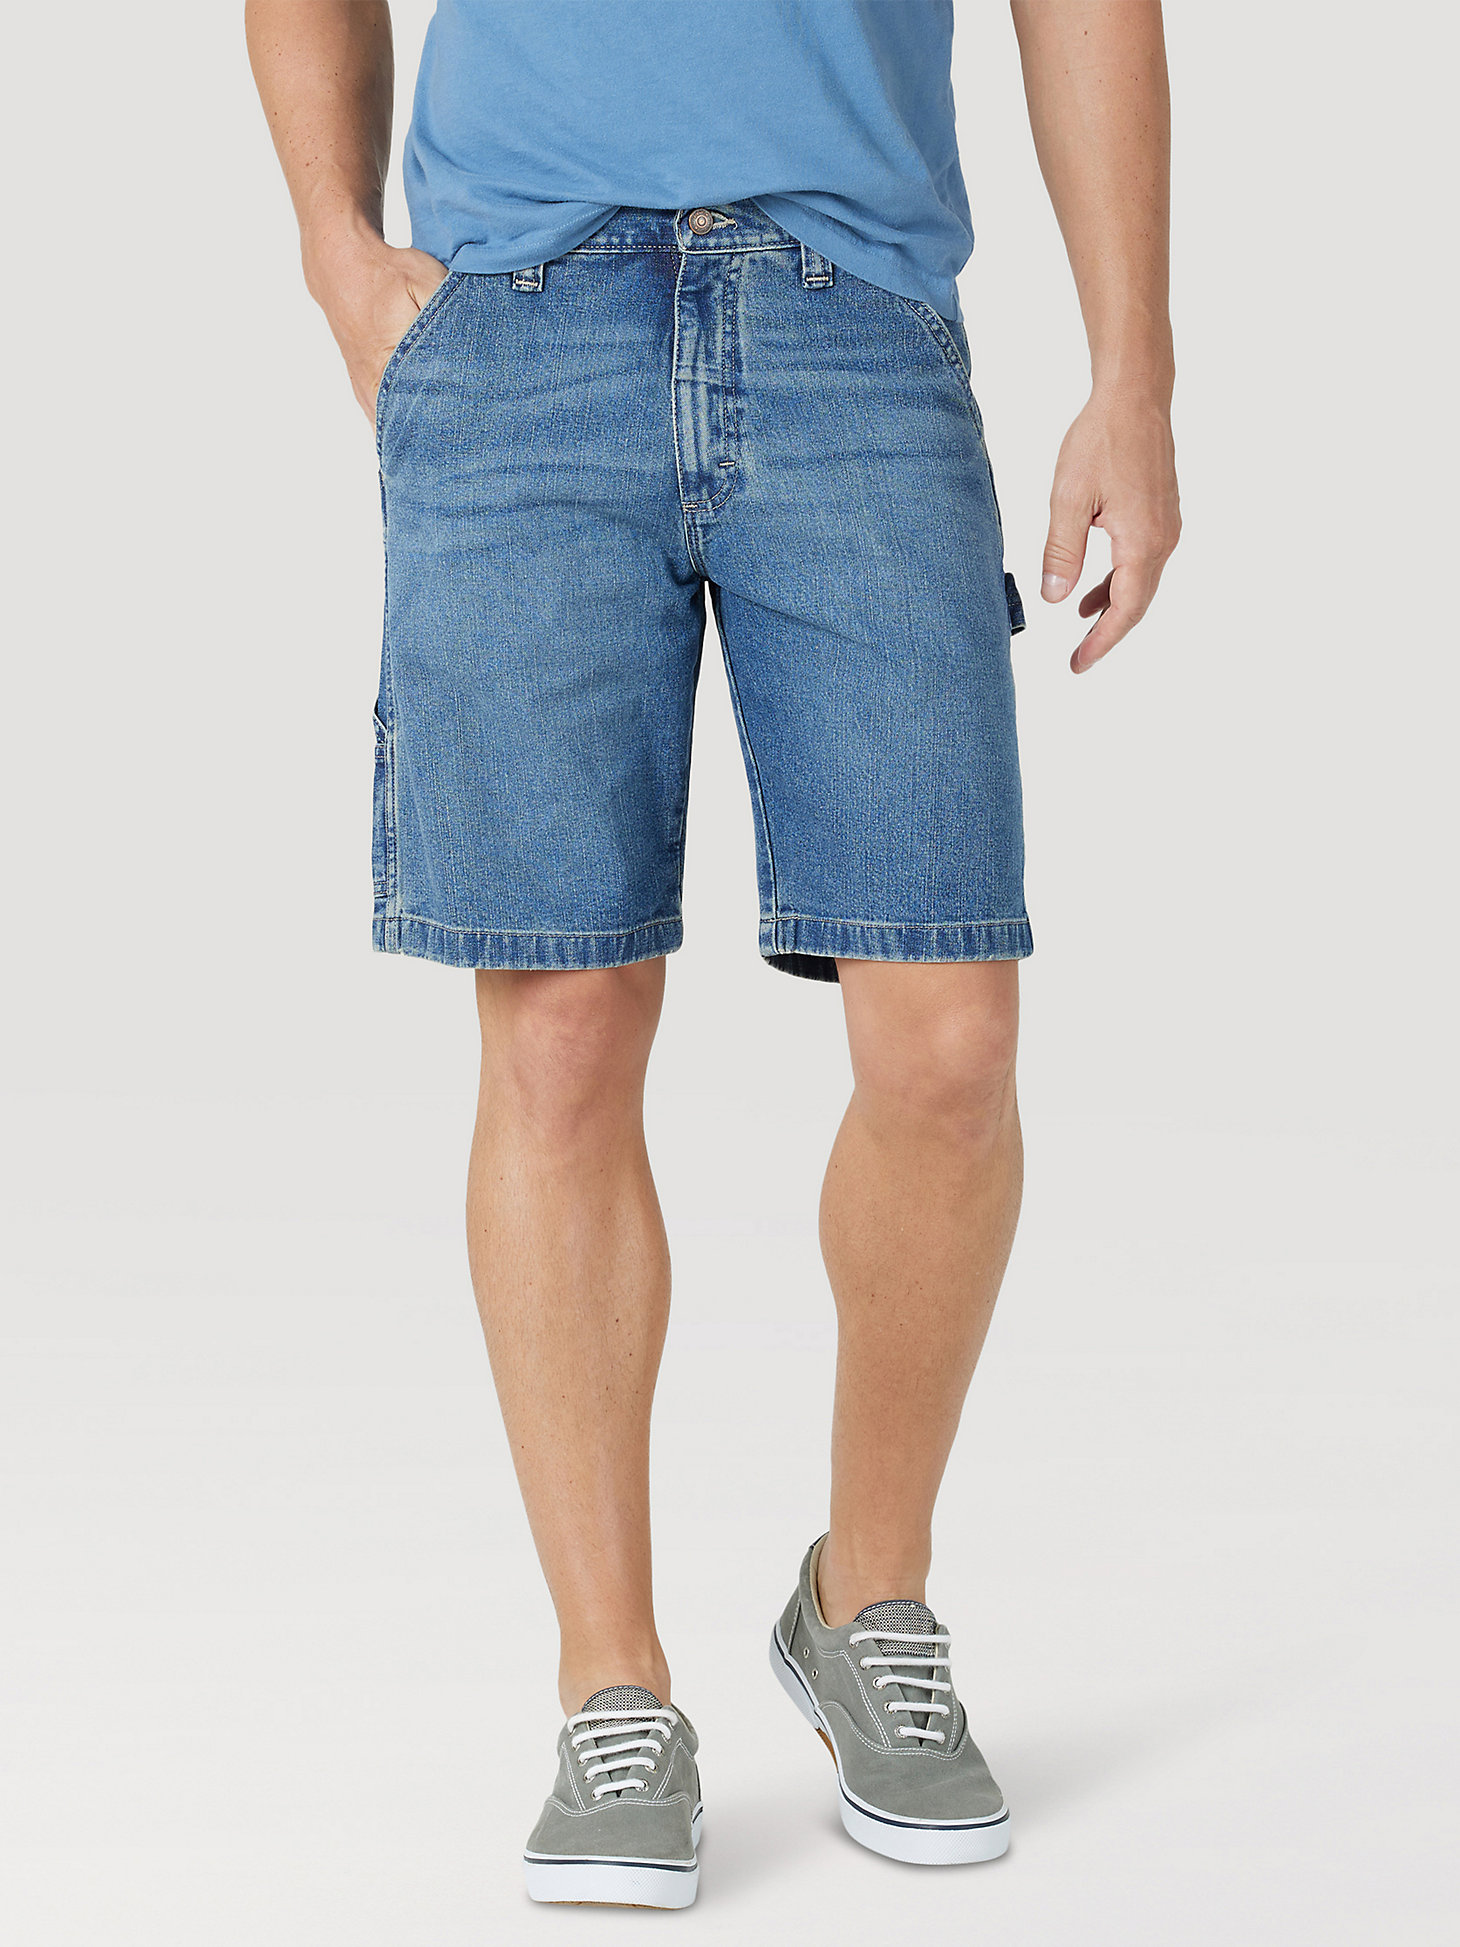 Men's Wrangler® Five Star Premium Carpenter Shorts in Vintage Tint main view